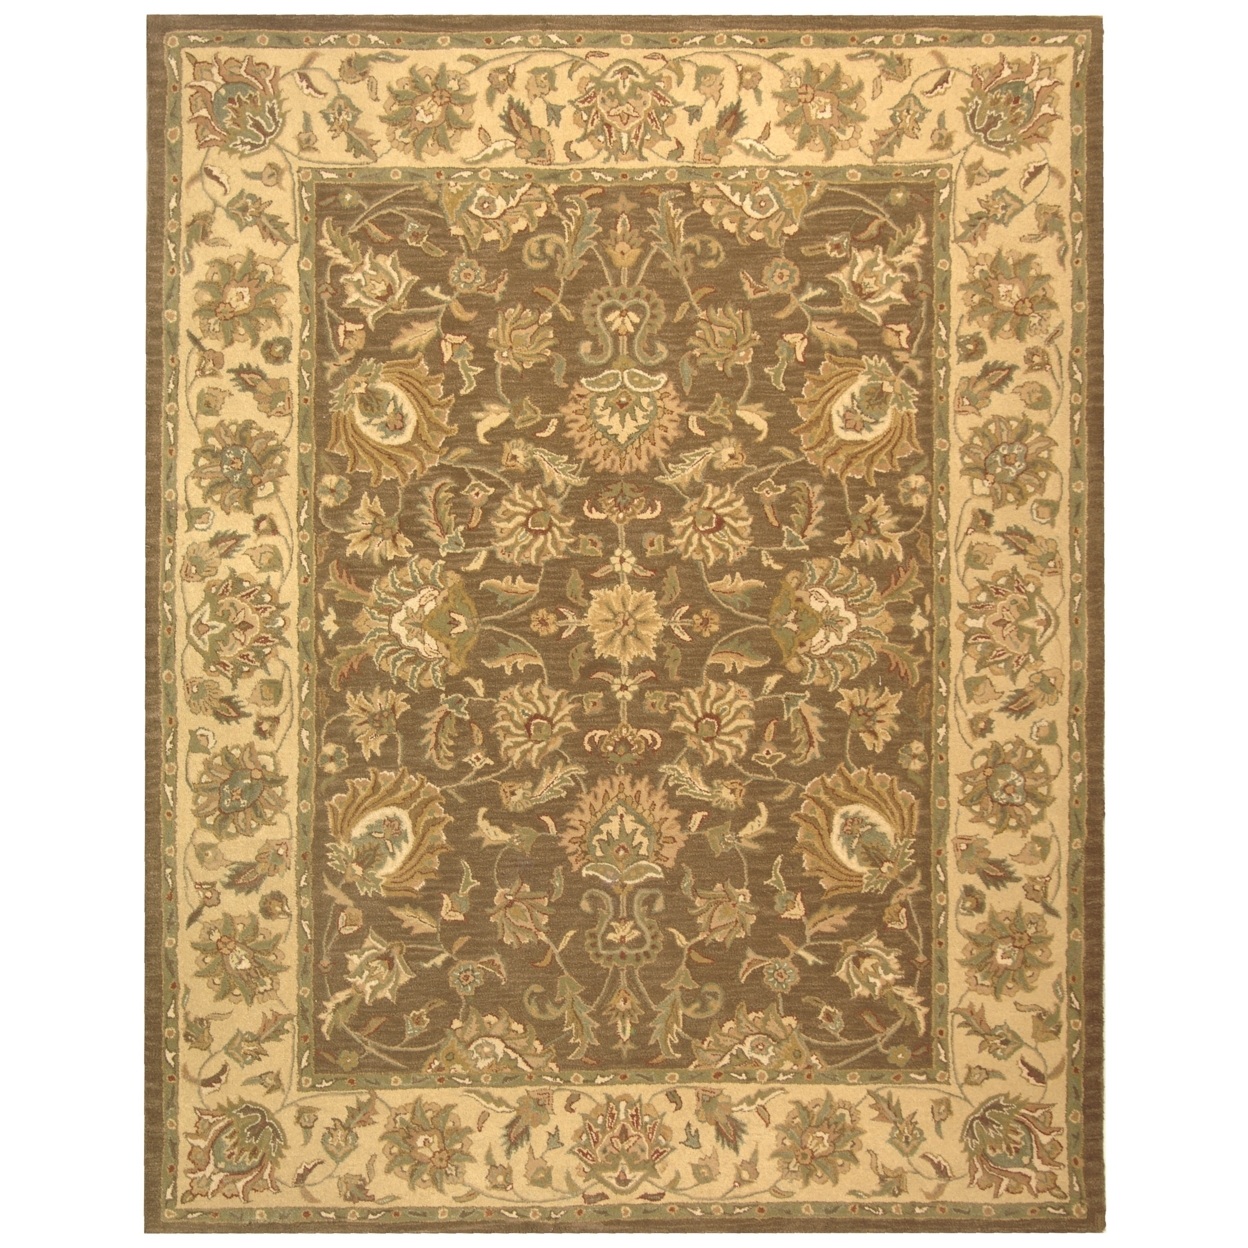 SAFAVIEH Heritage Regis Traditional Wool Area Rug, Brown/Ivory, 7'6" x 9'6" - image 1 of 4